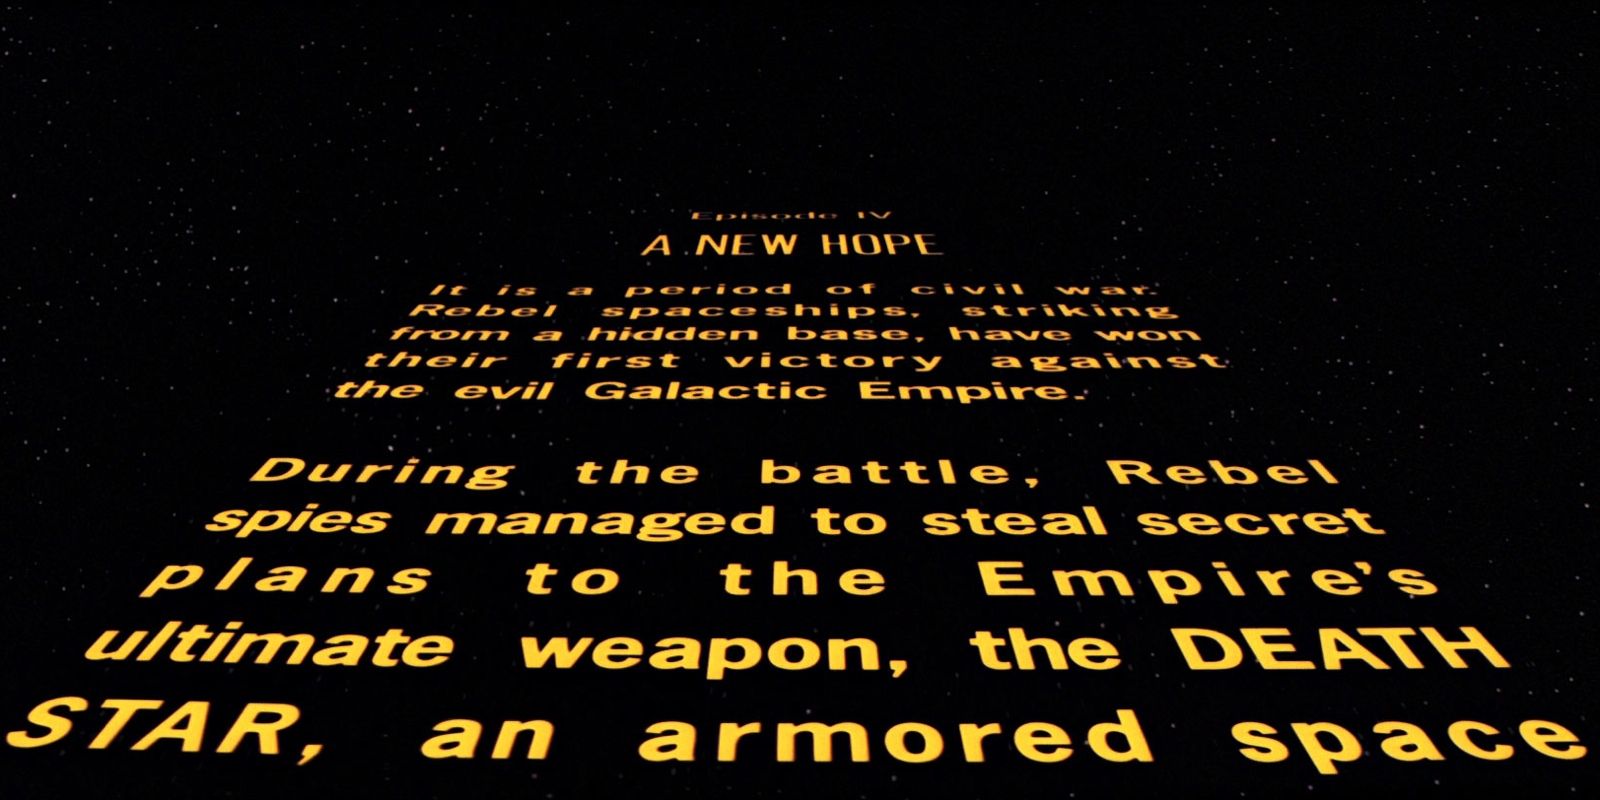 Star Wars New Hope opening crawl